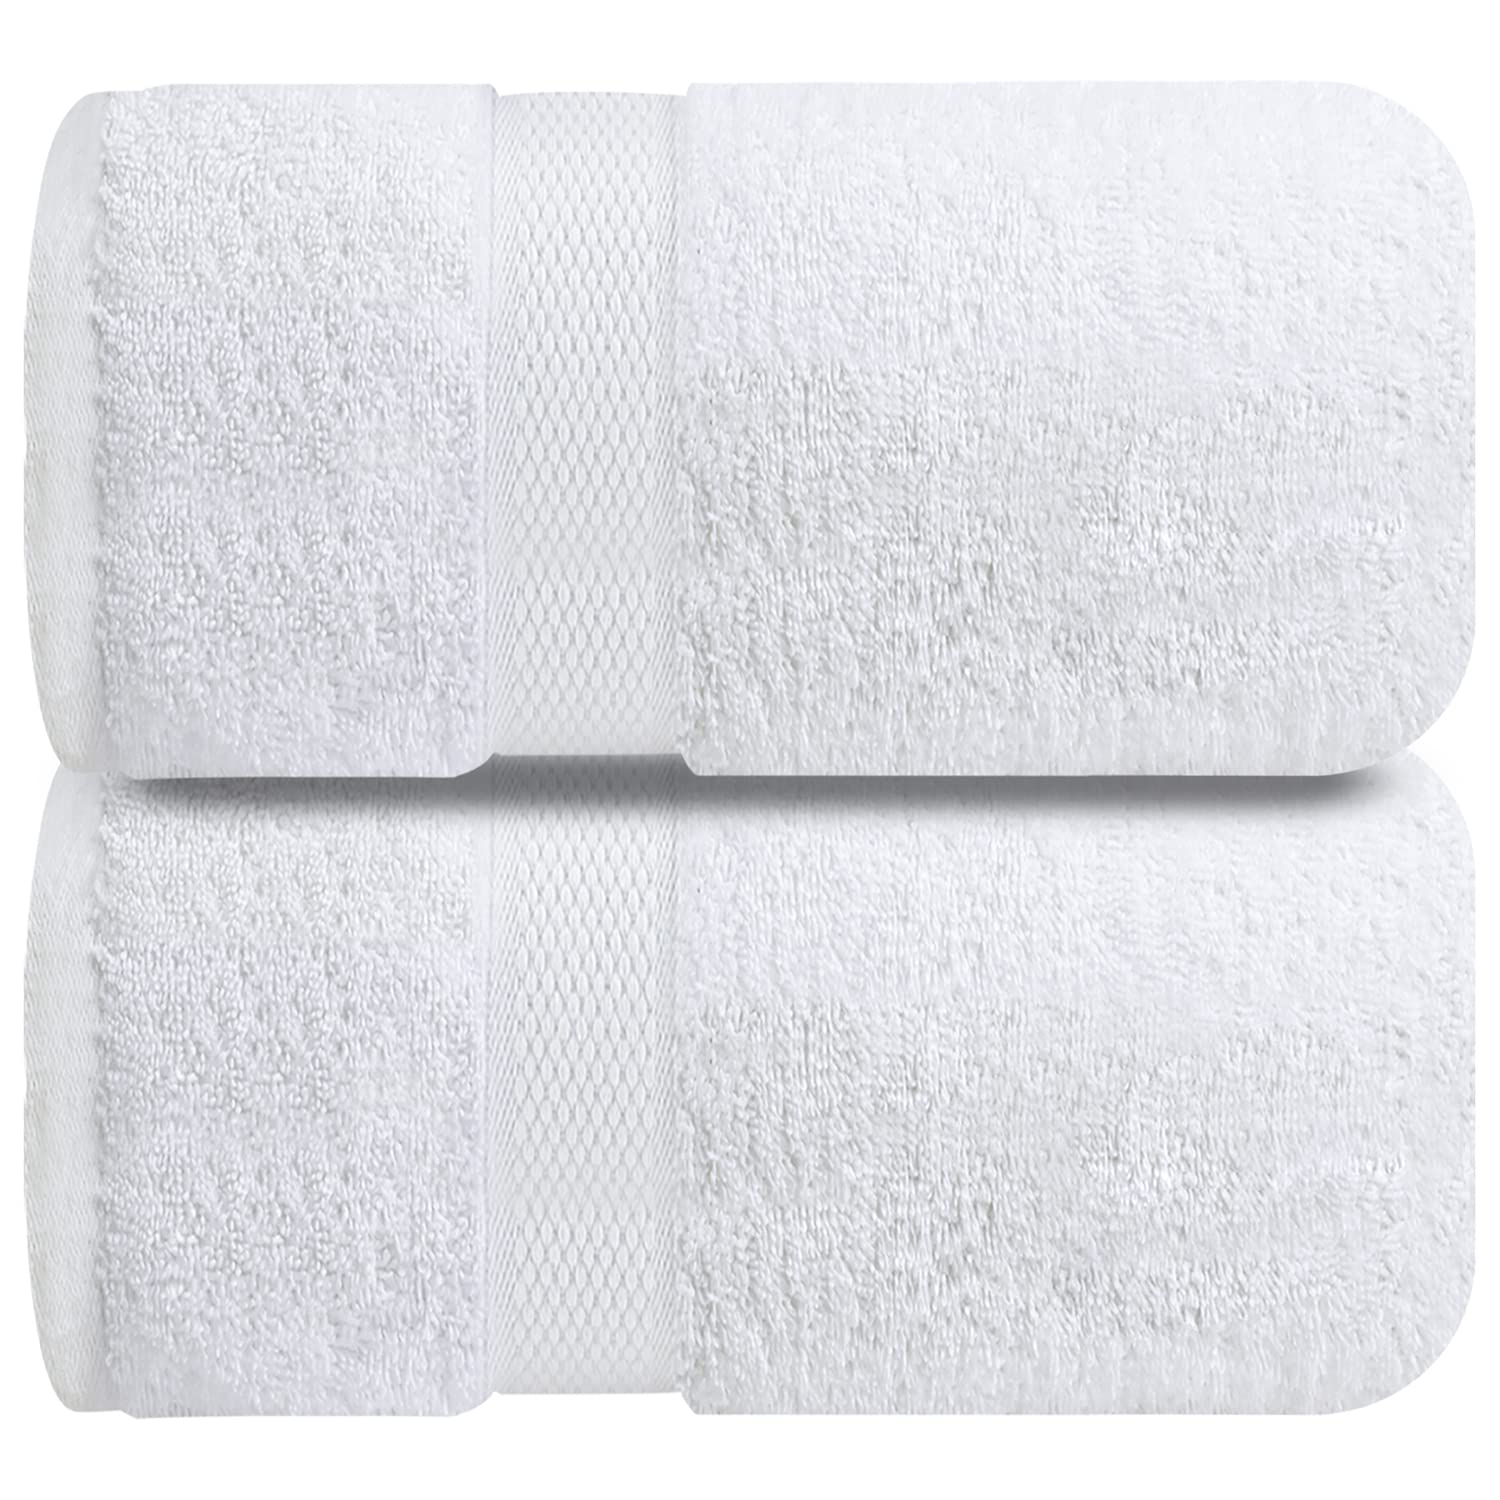  Large Bath Towels 35x70 Clearance